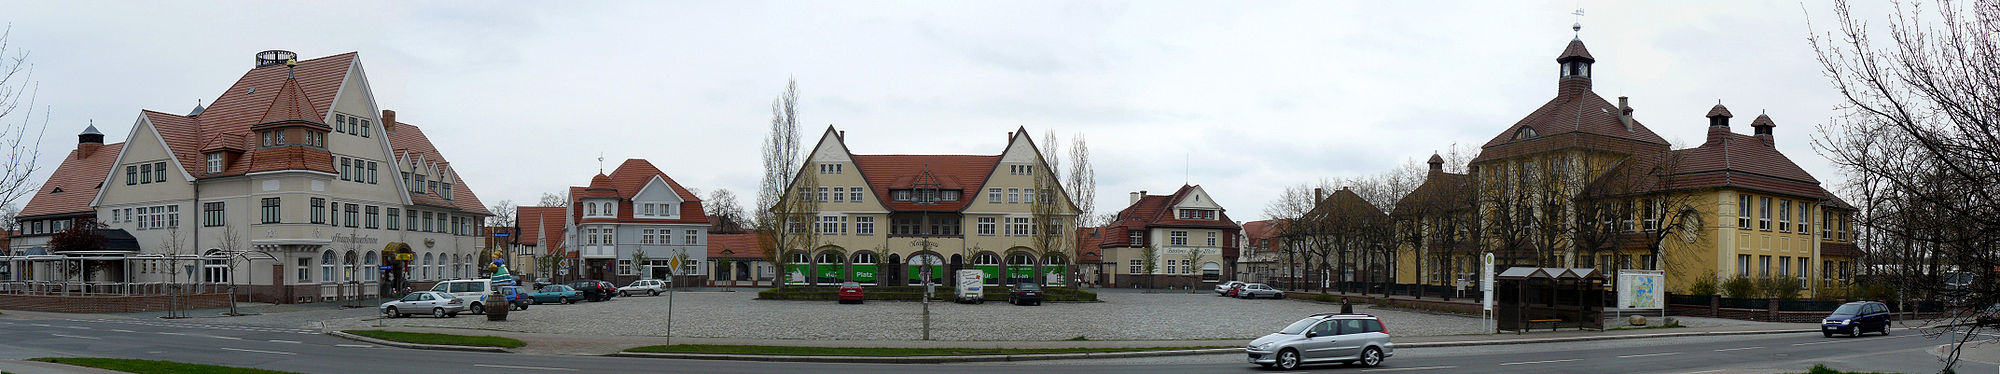 Marktplatz Gartenstadt Marga